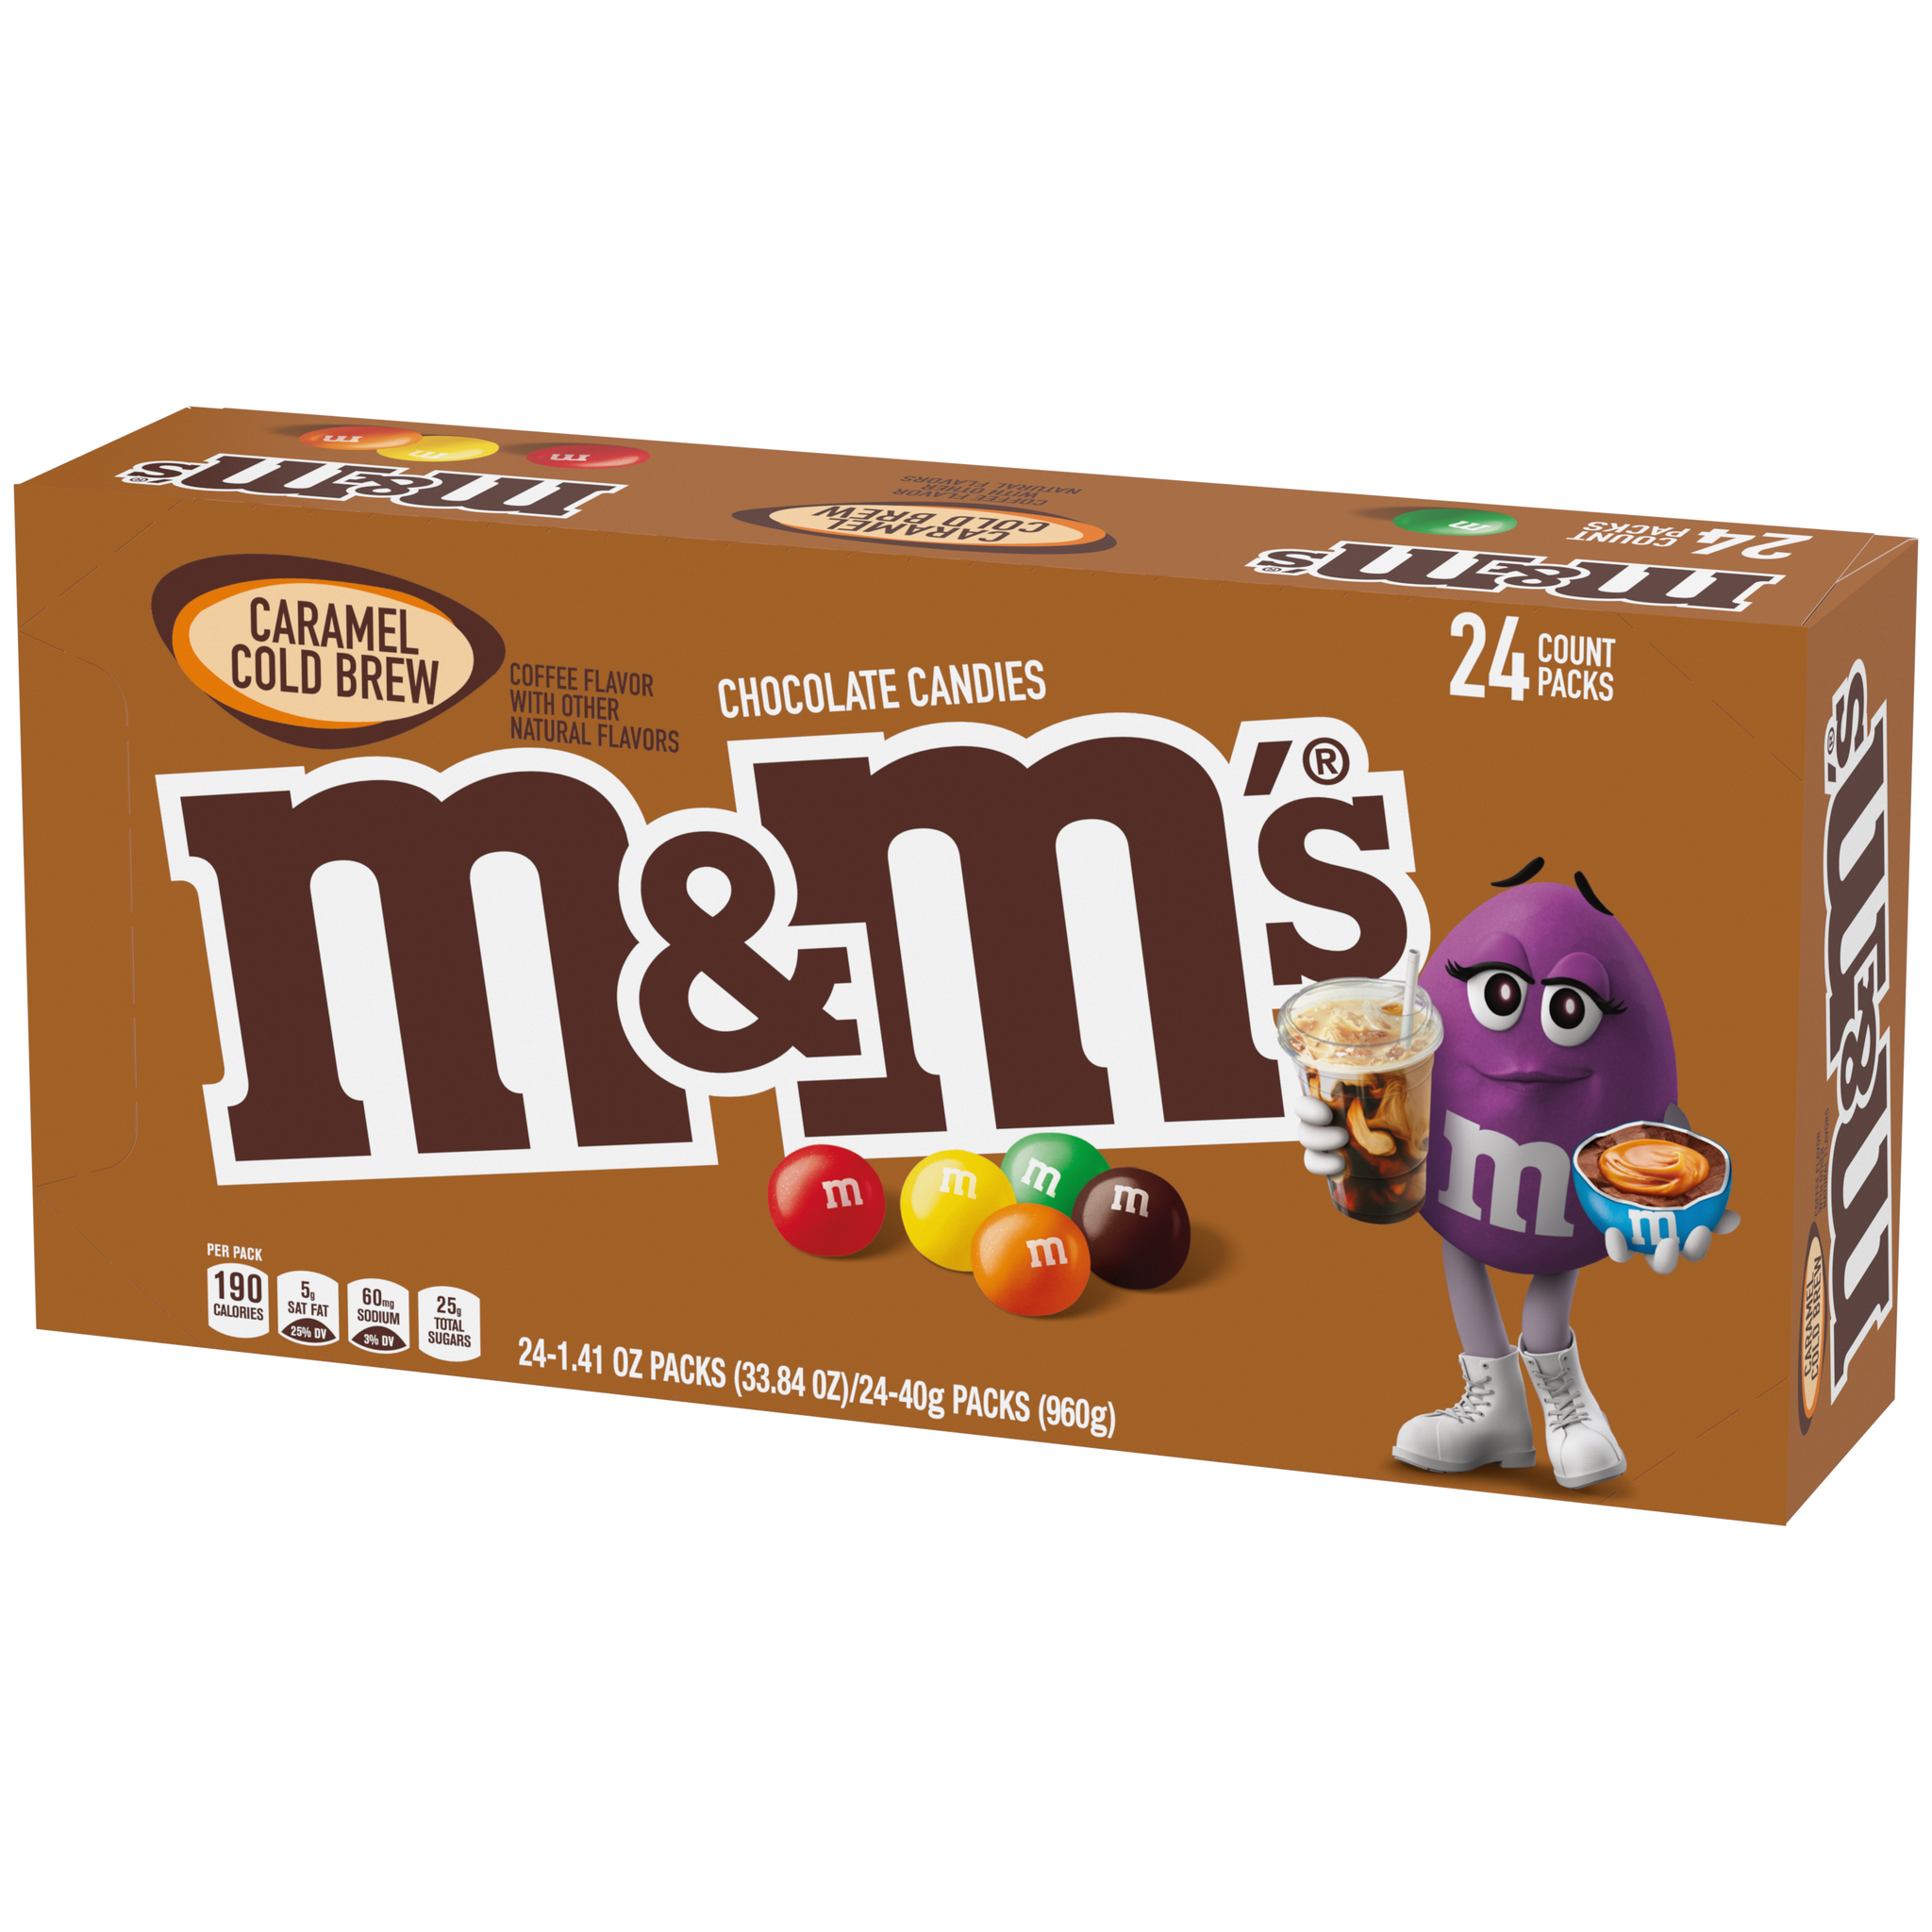 UPDATED] M&M's New Coffee Nut Flavor - Peanut M&Ms